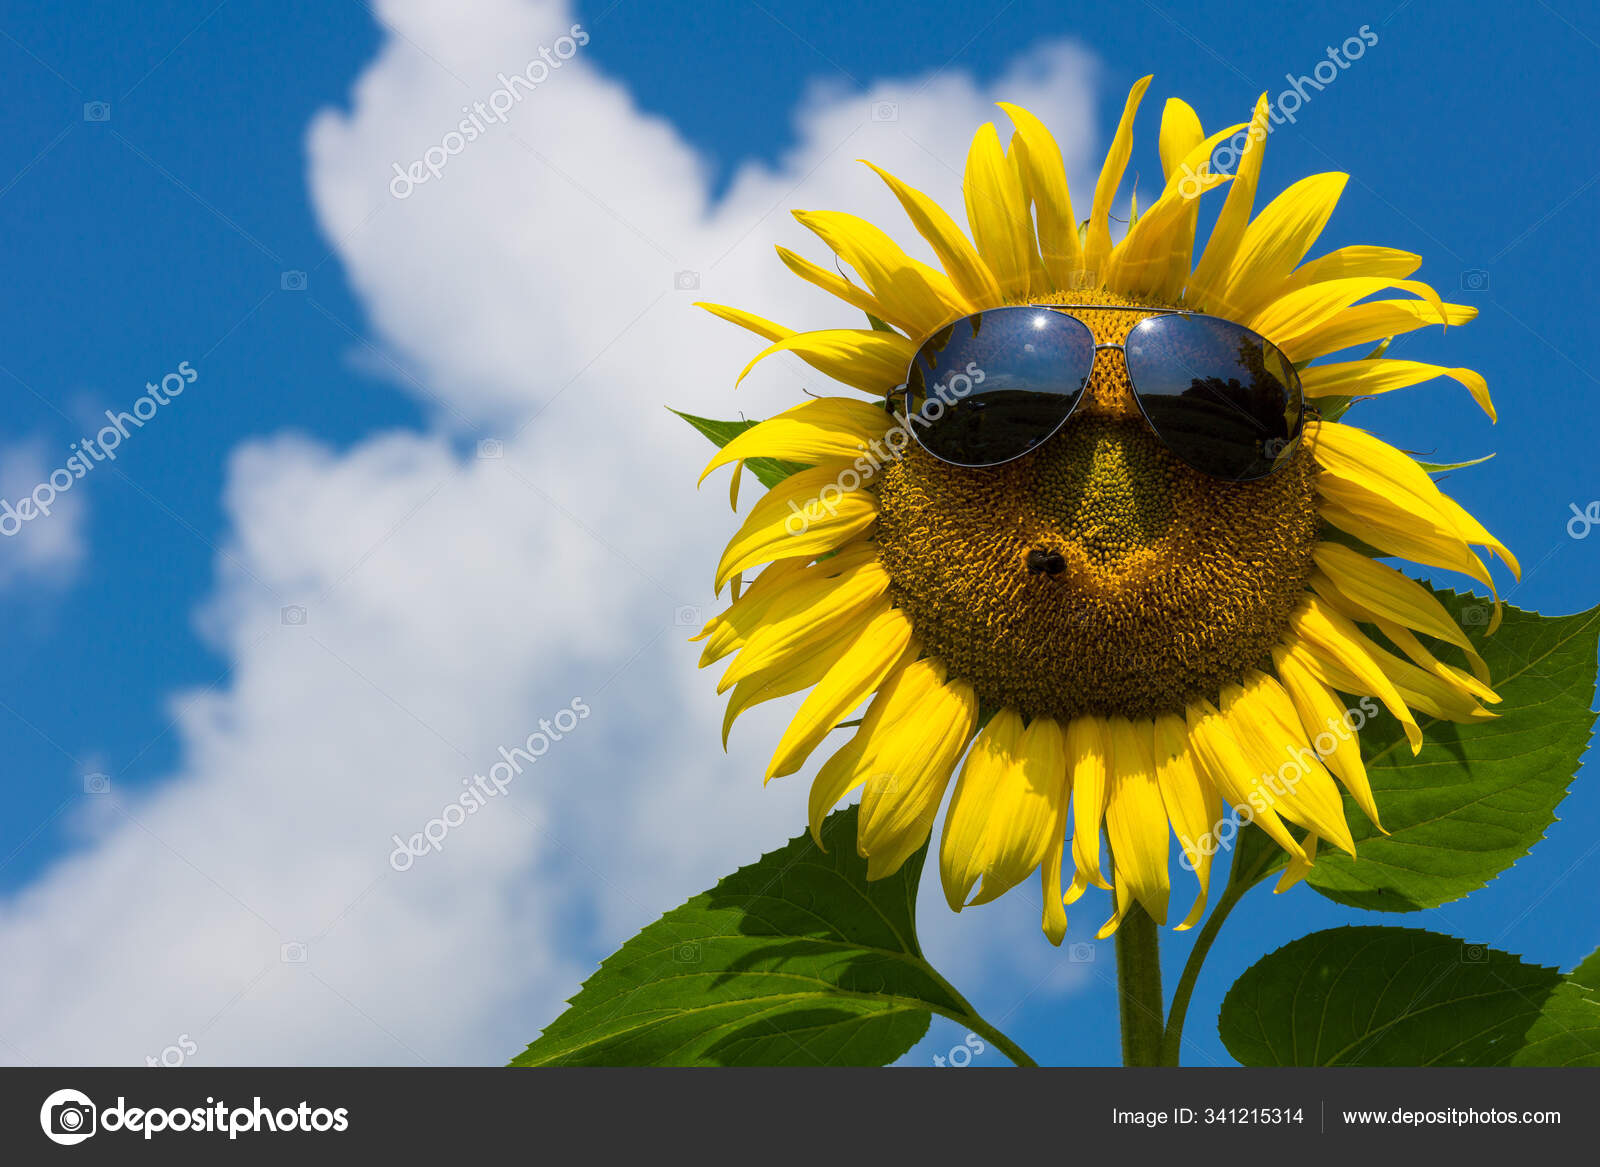 Sunglasses Hummel Stock Photo by 341215314